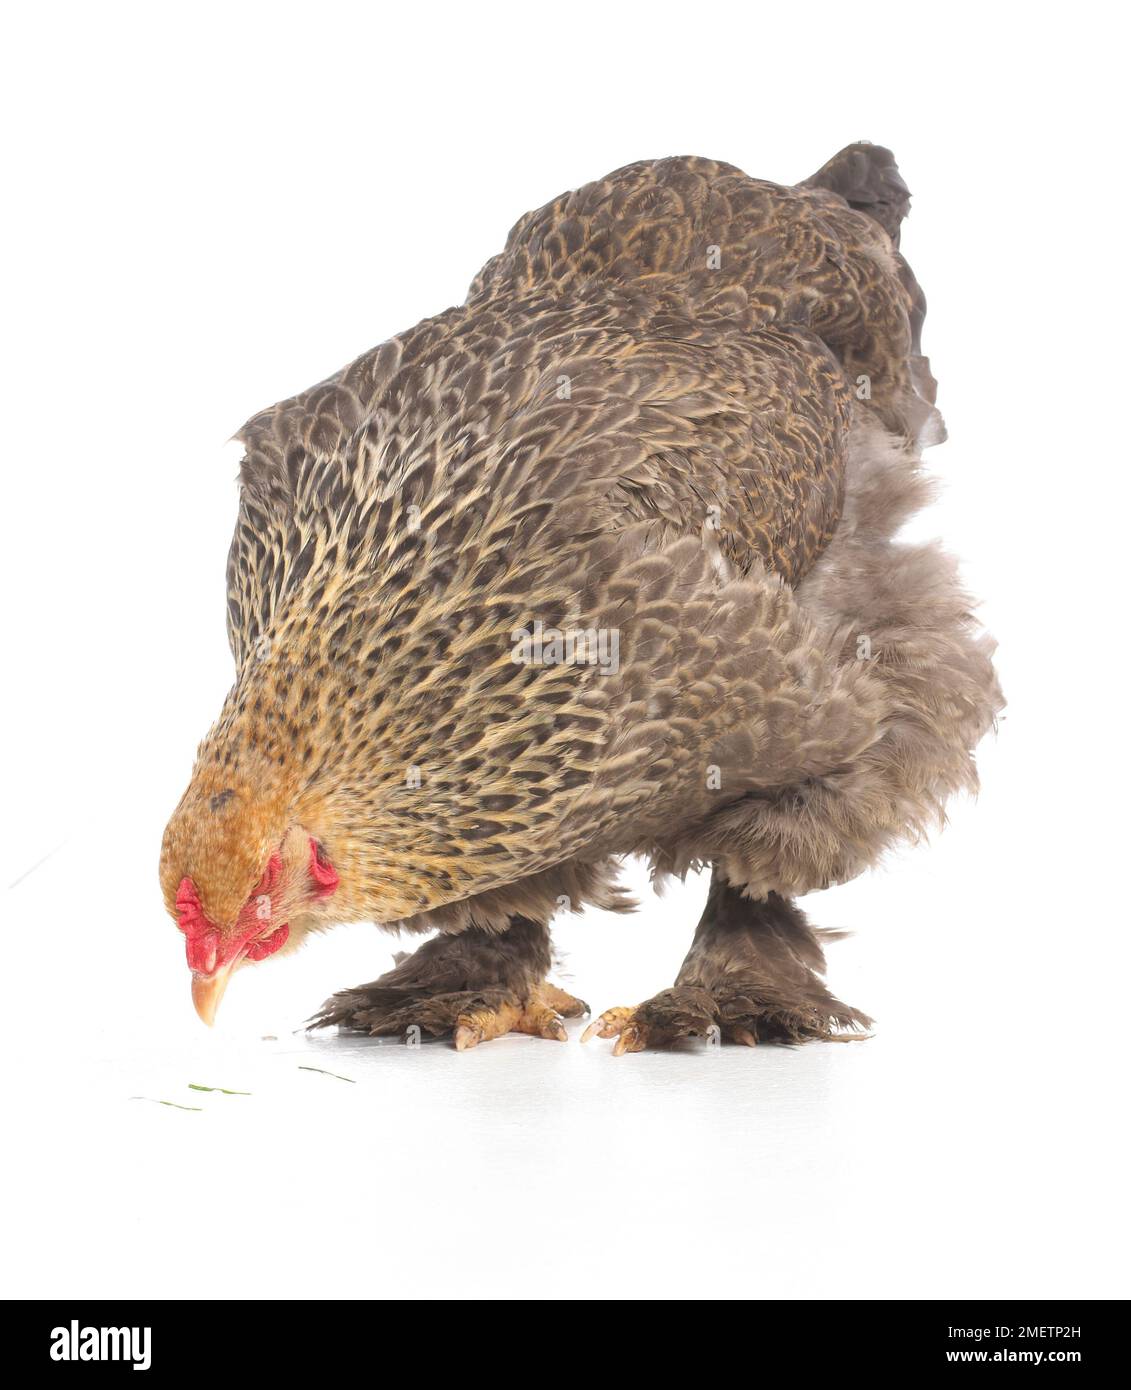 Brahma (chicken) stock image. Image of chicken, bondage - 37924587